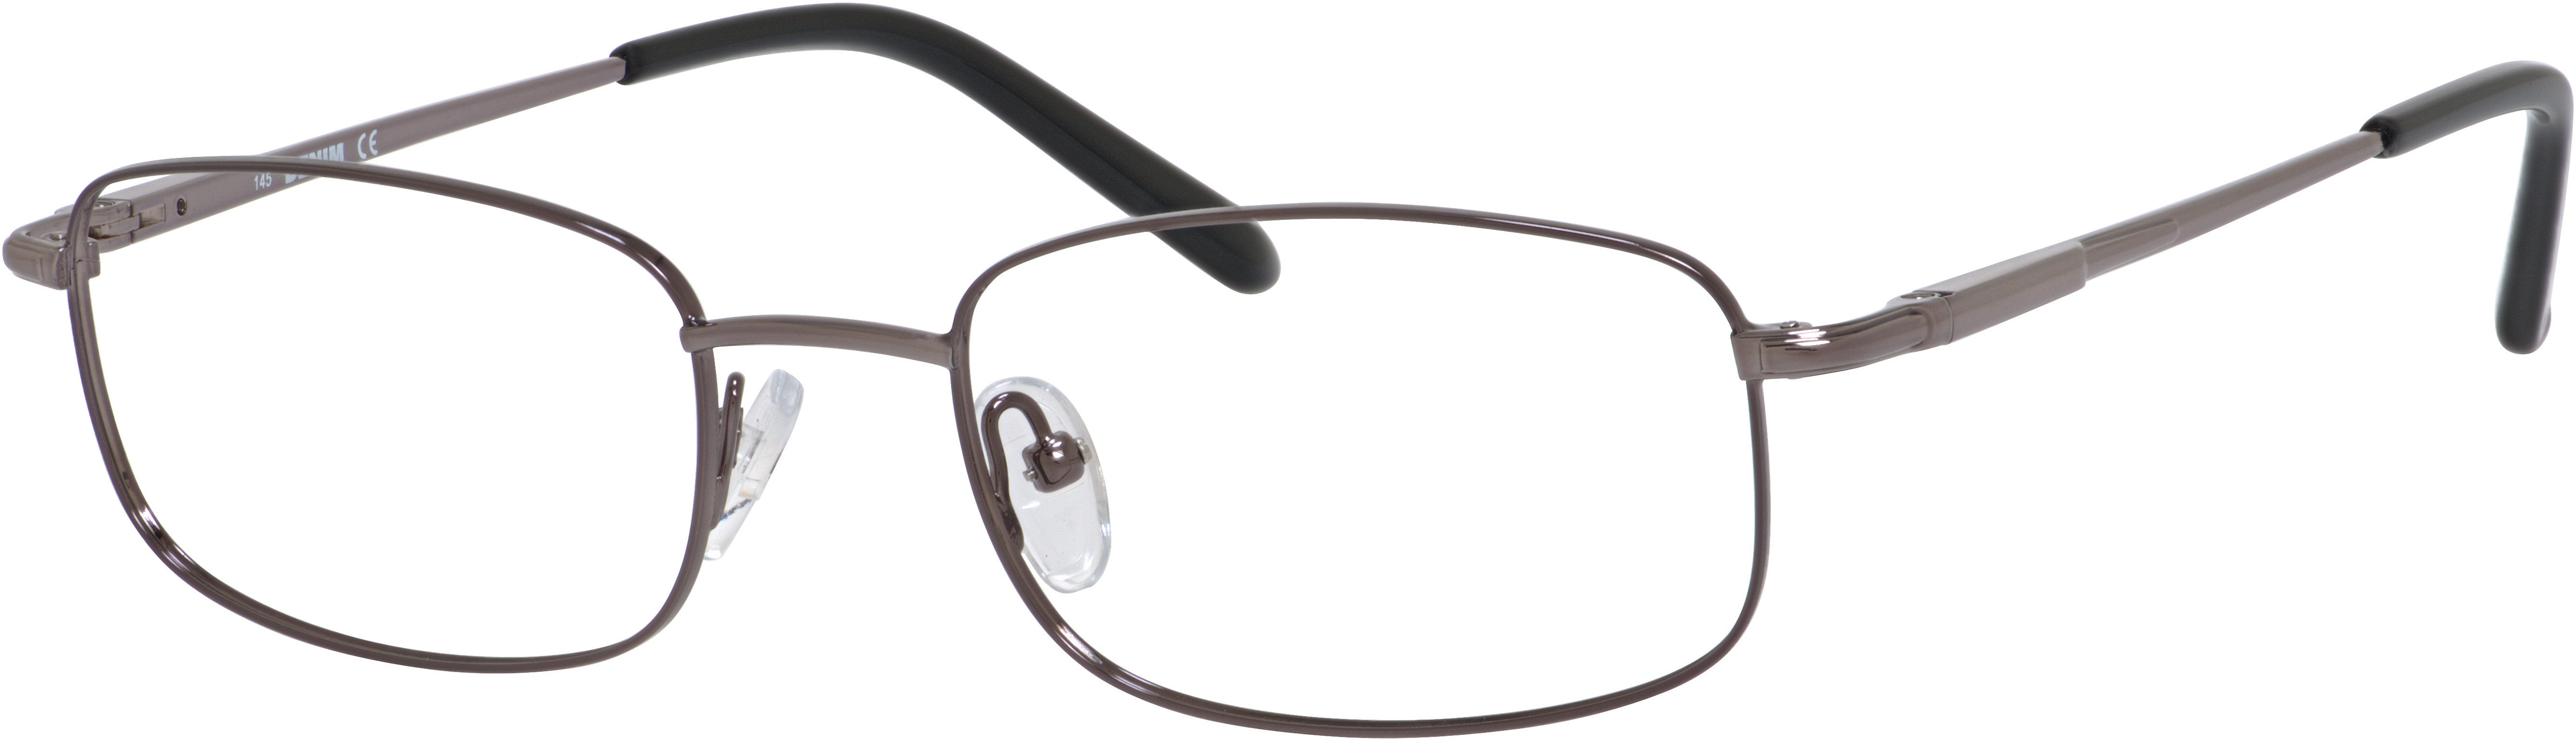  Denim 132 Rectangular Eyeglasses 0X93-0X93  Gunmetal (00 Demo Lens)